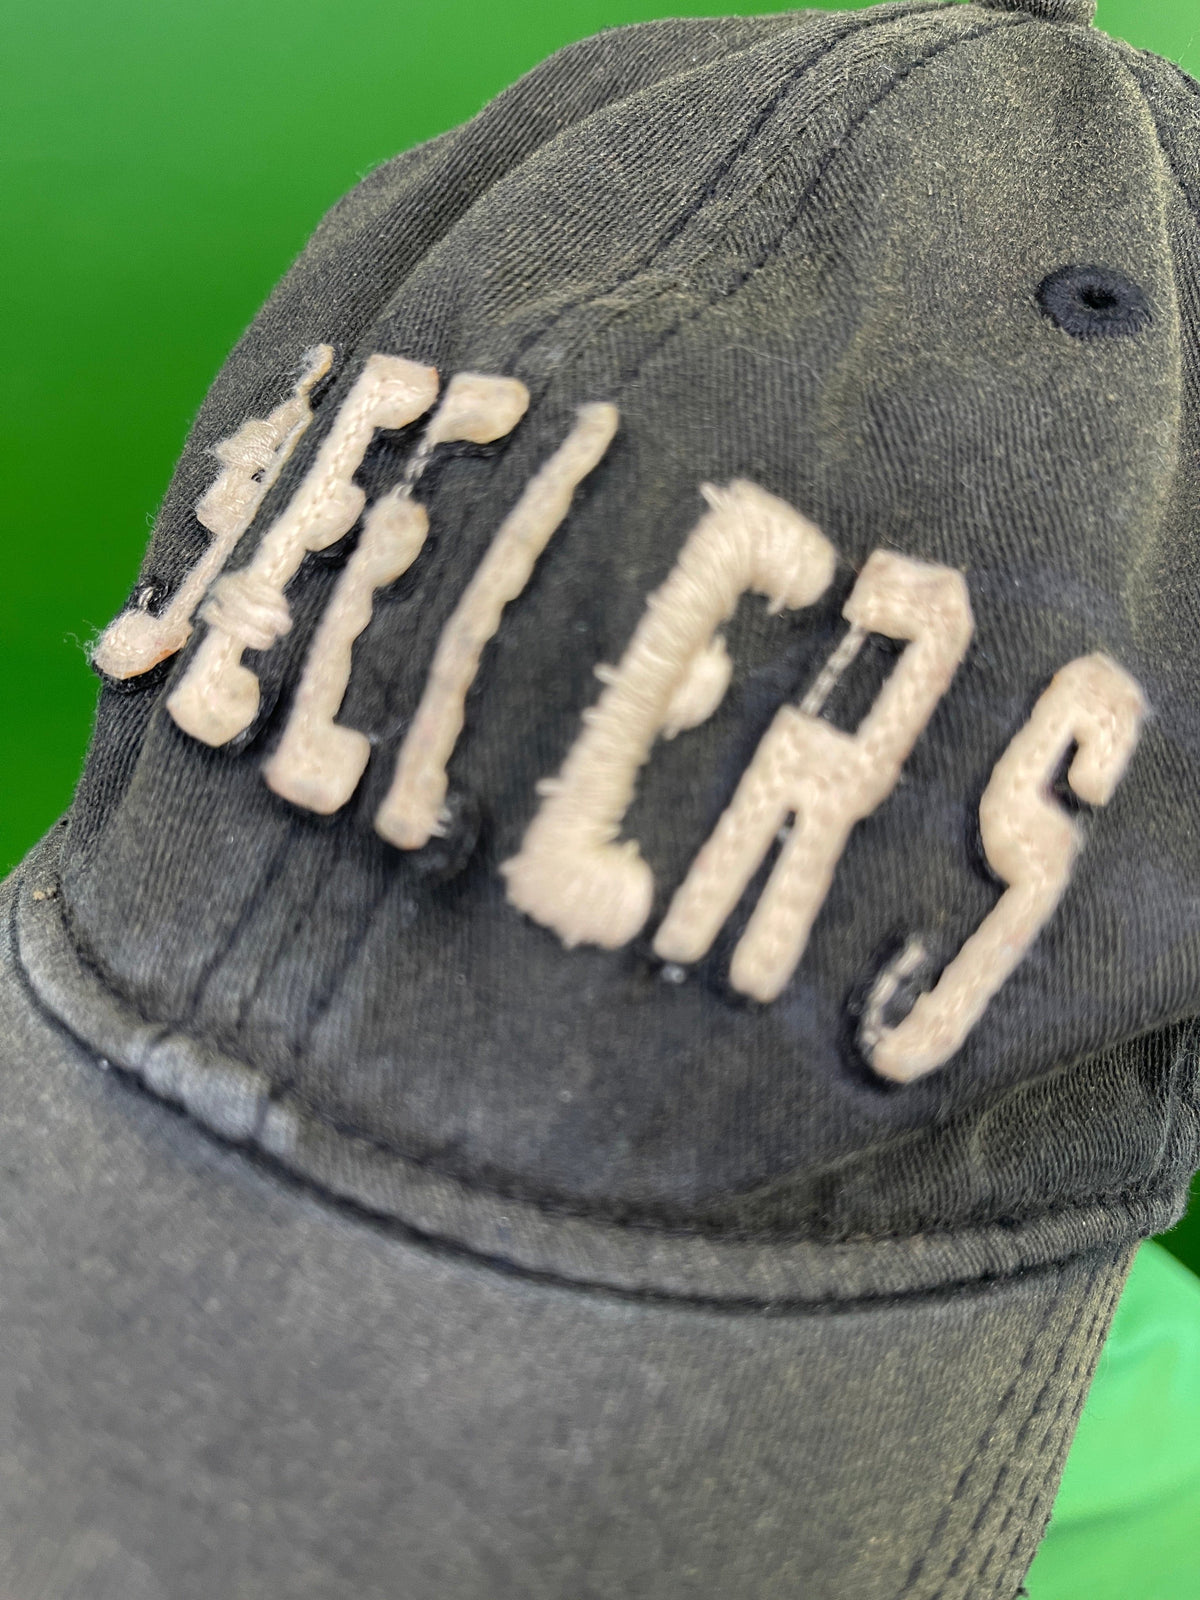 NFL Pittsburgh Steelers Reebok Vintage Collection Hat/Cap OSFM